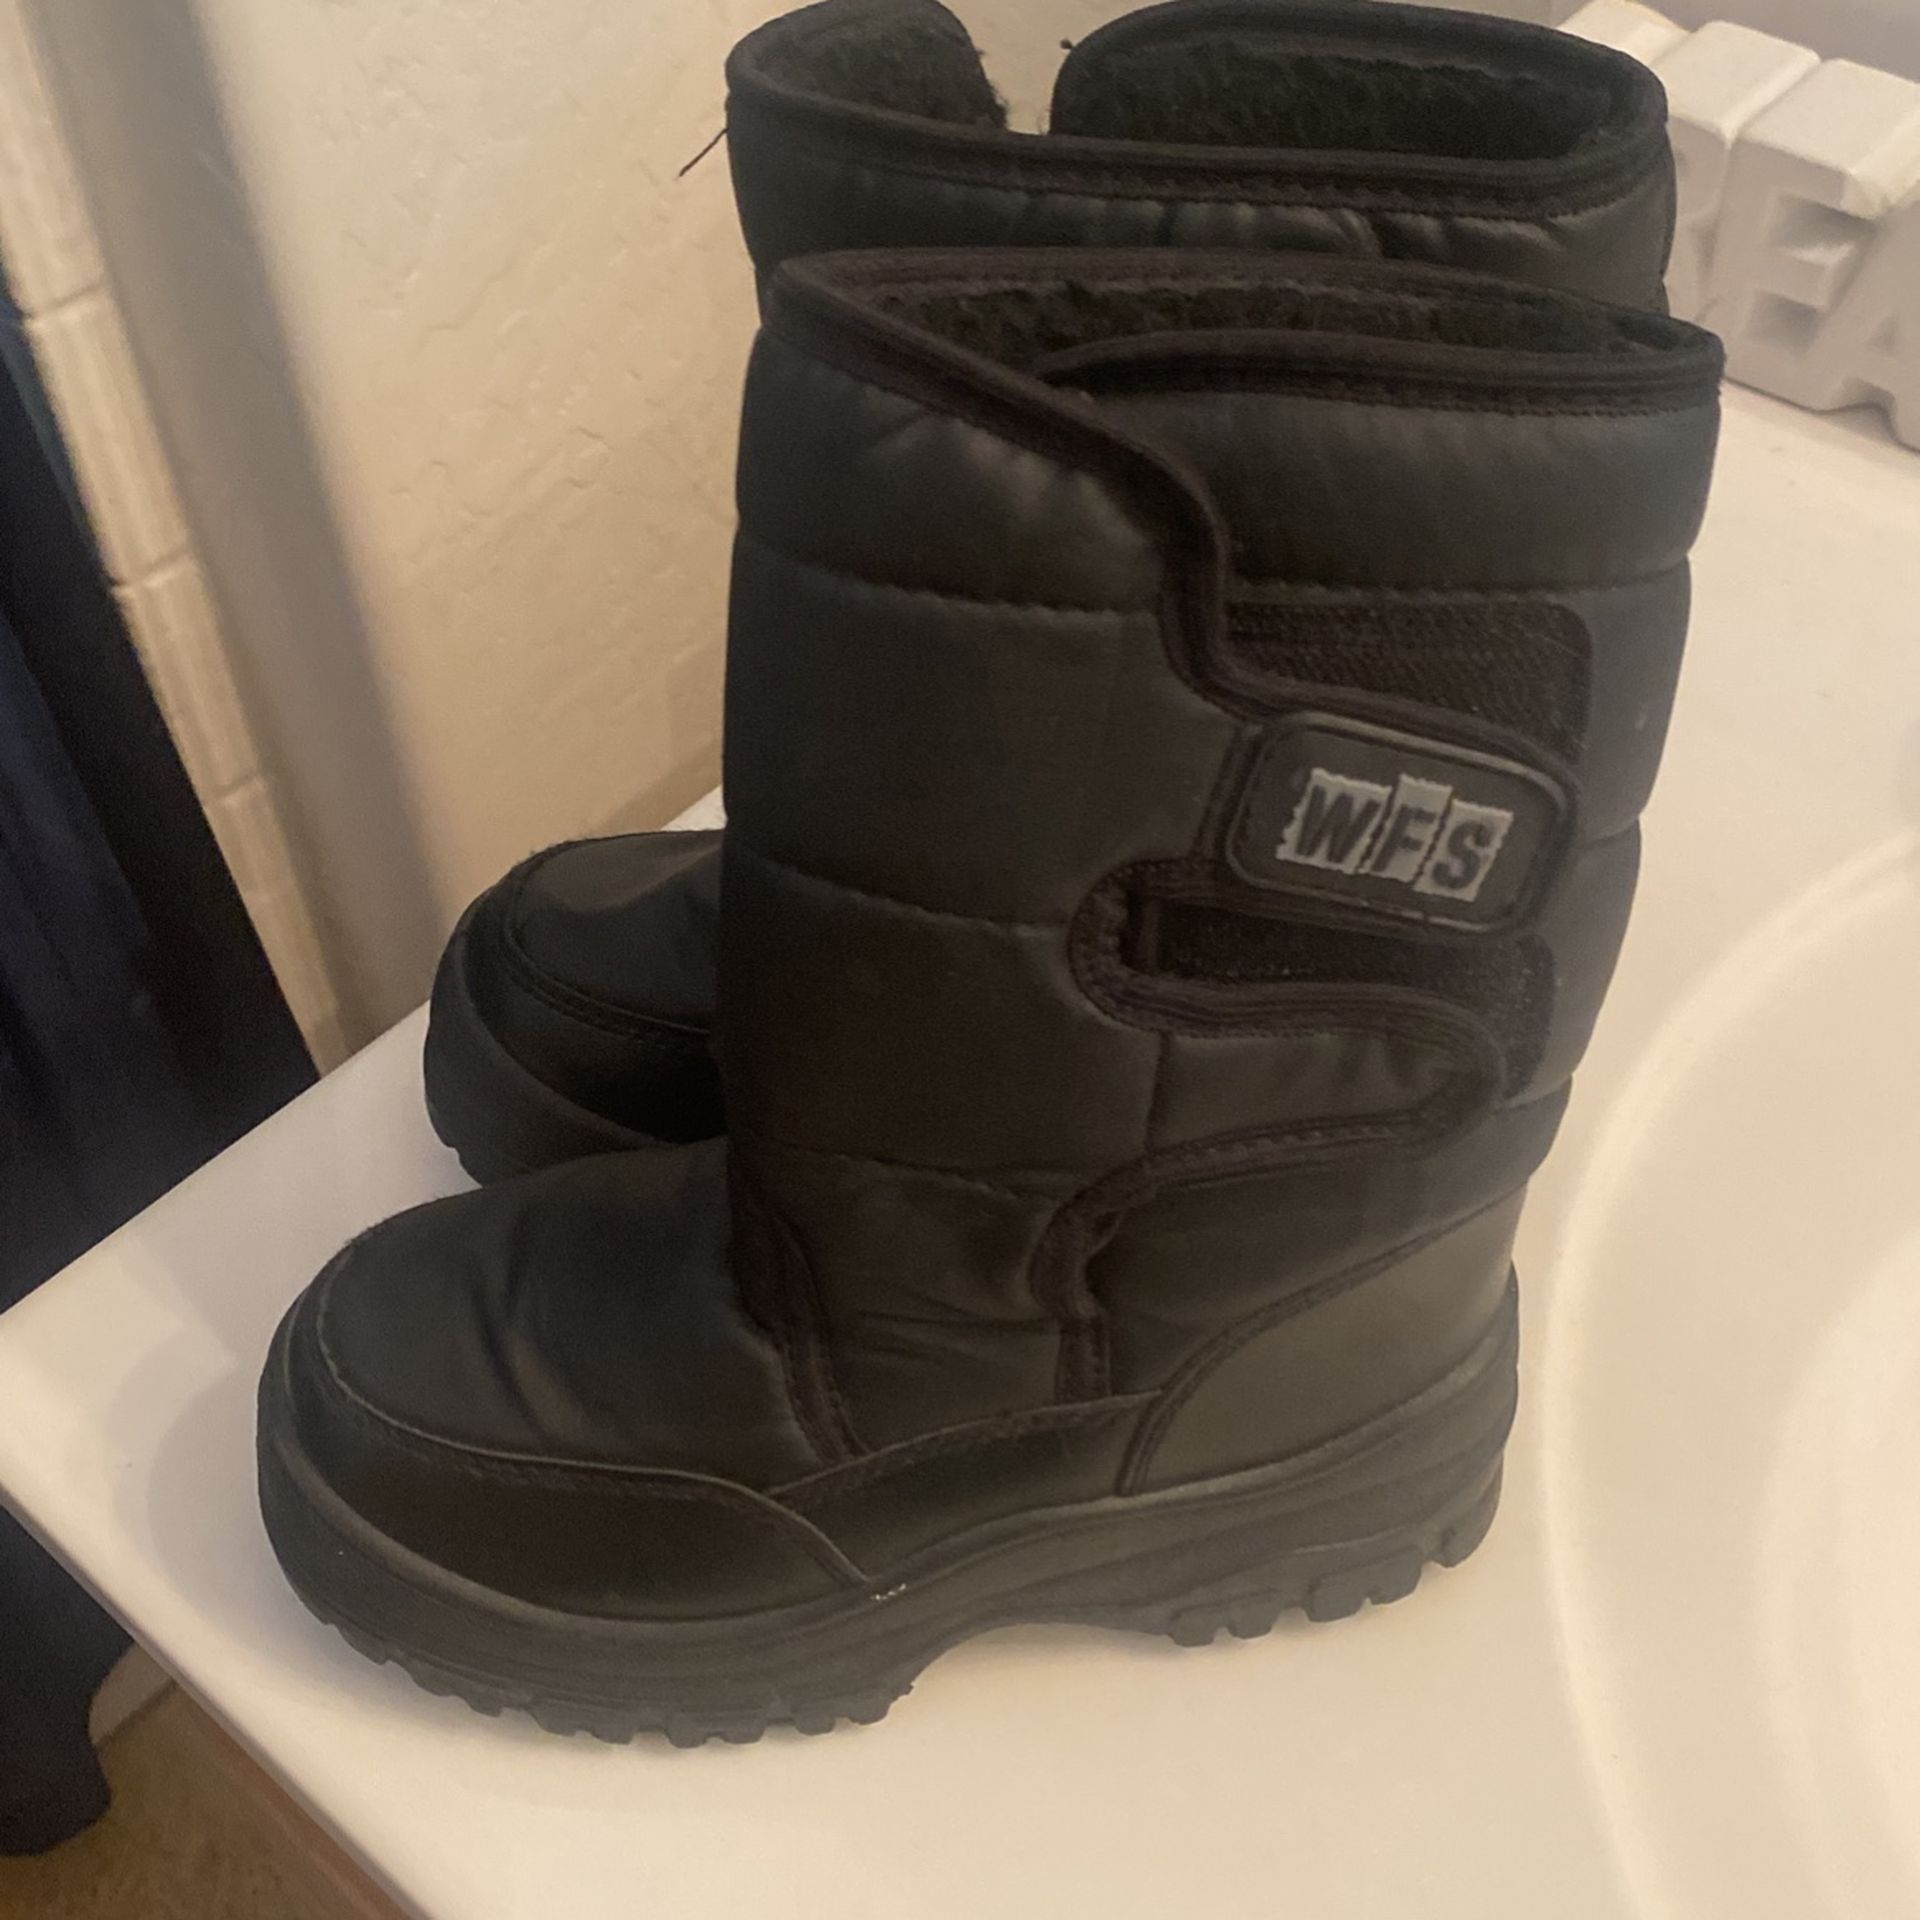 Kids Snow Boots Size 12 